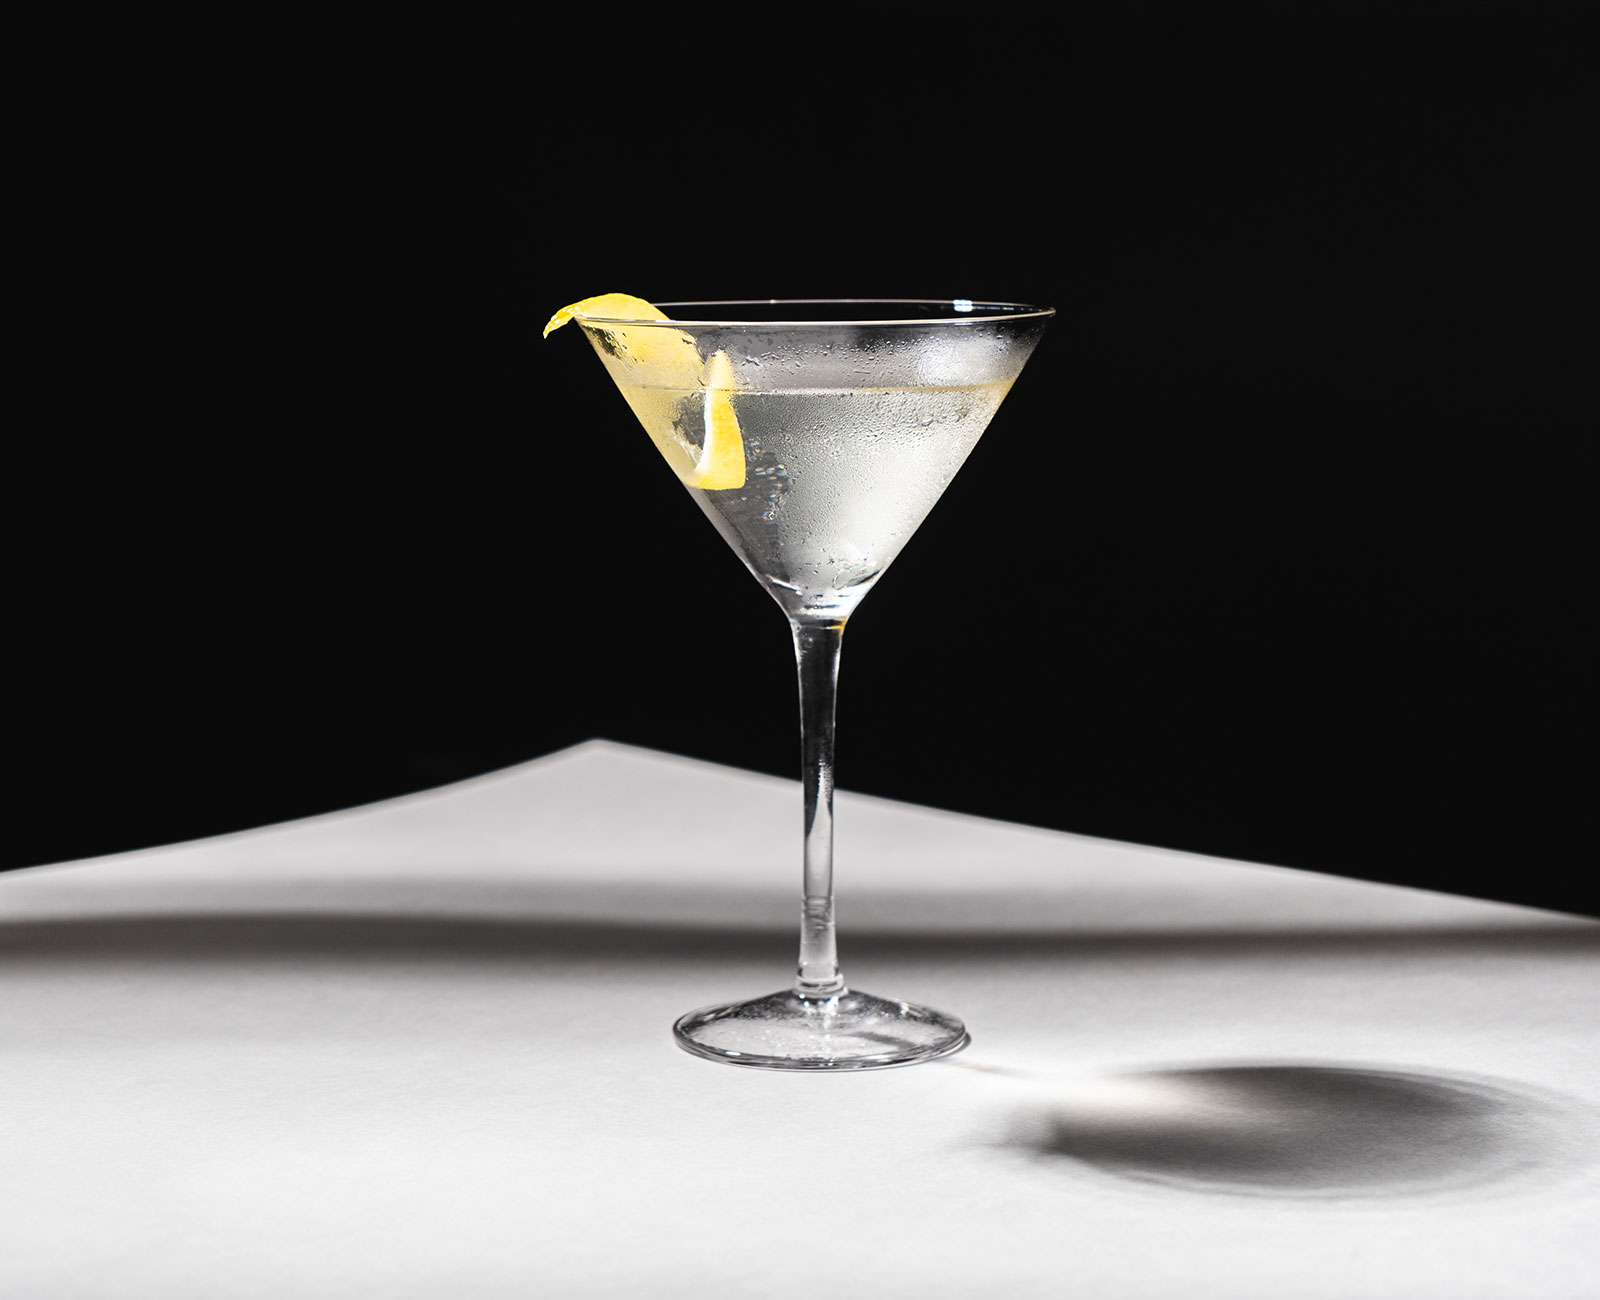 Vya Extra Dry Martini with lemon peel garnish